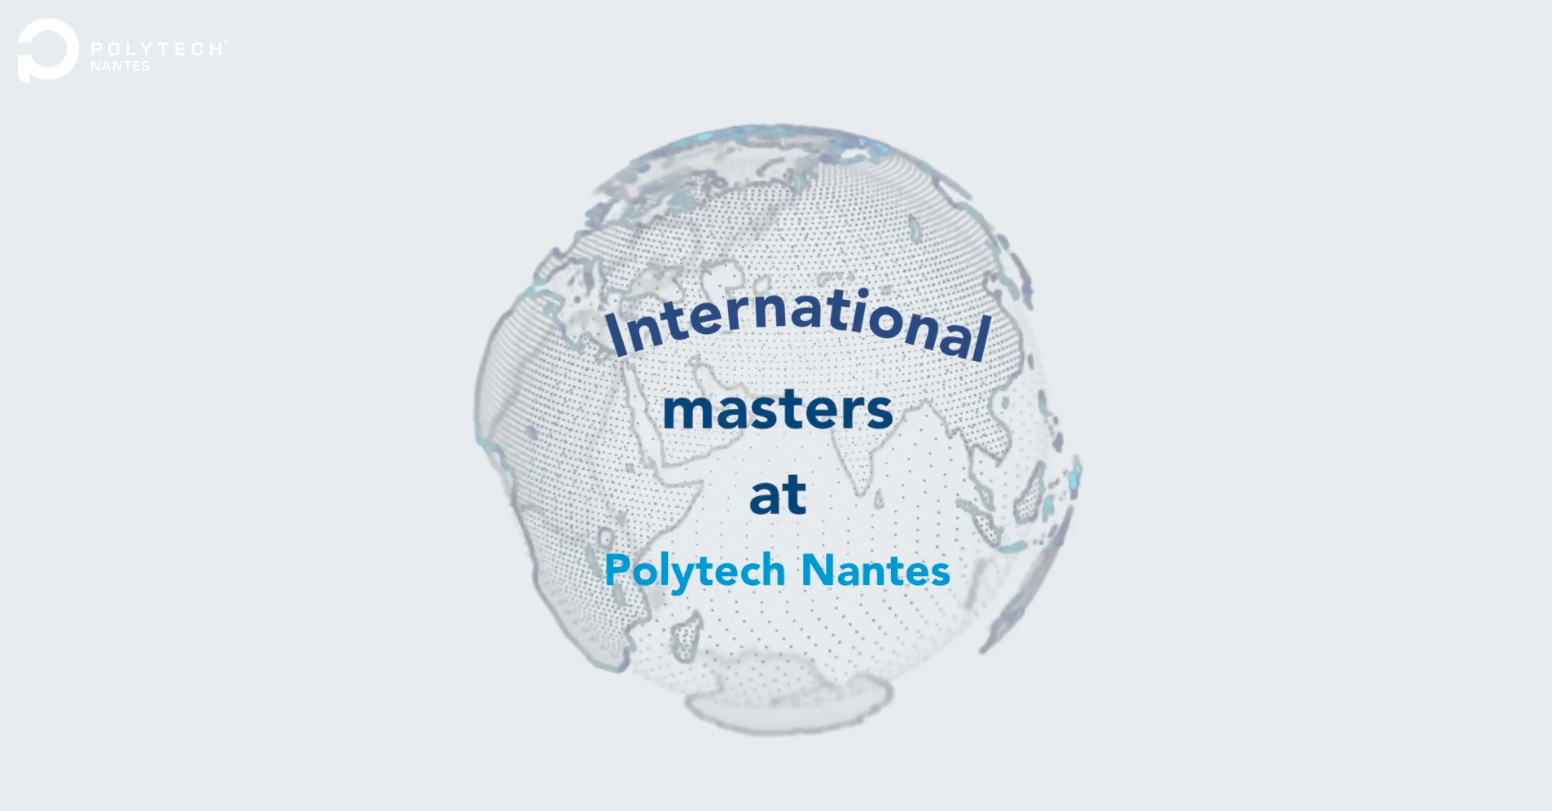 International masters degrees Polytech Nantes